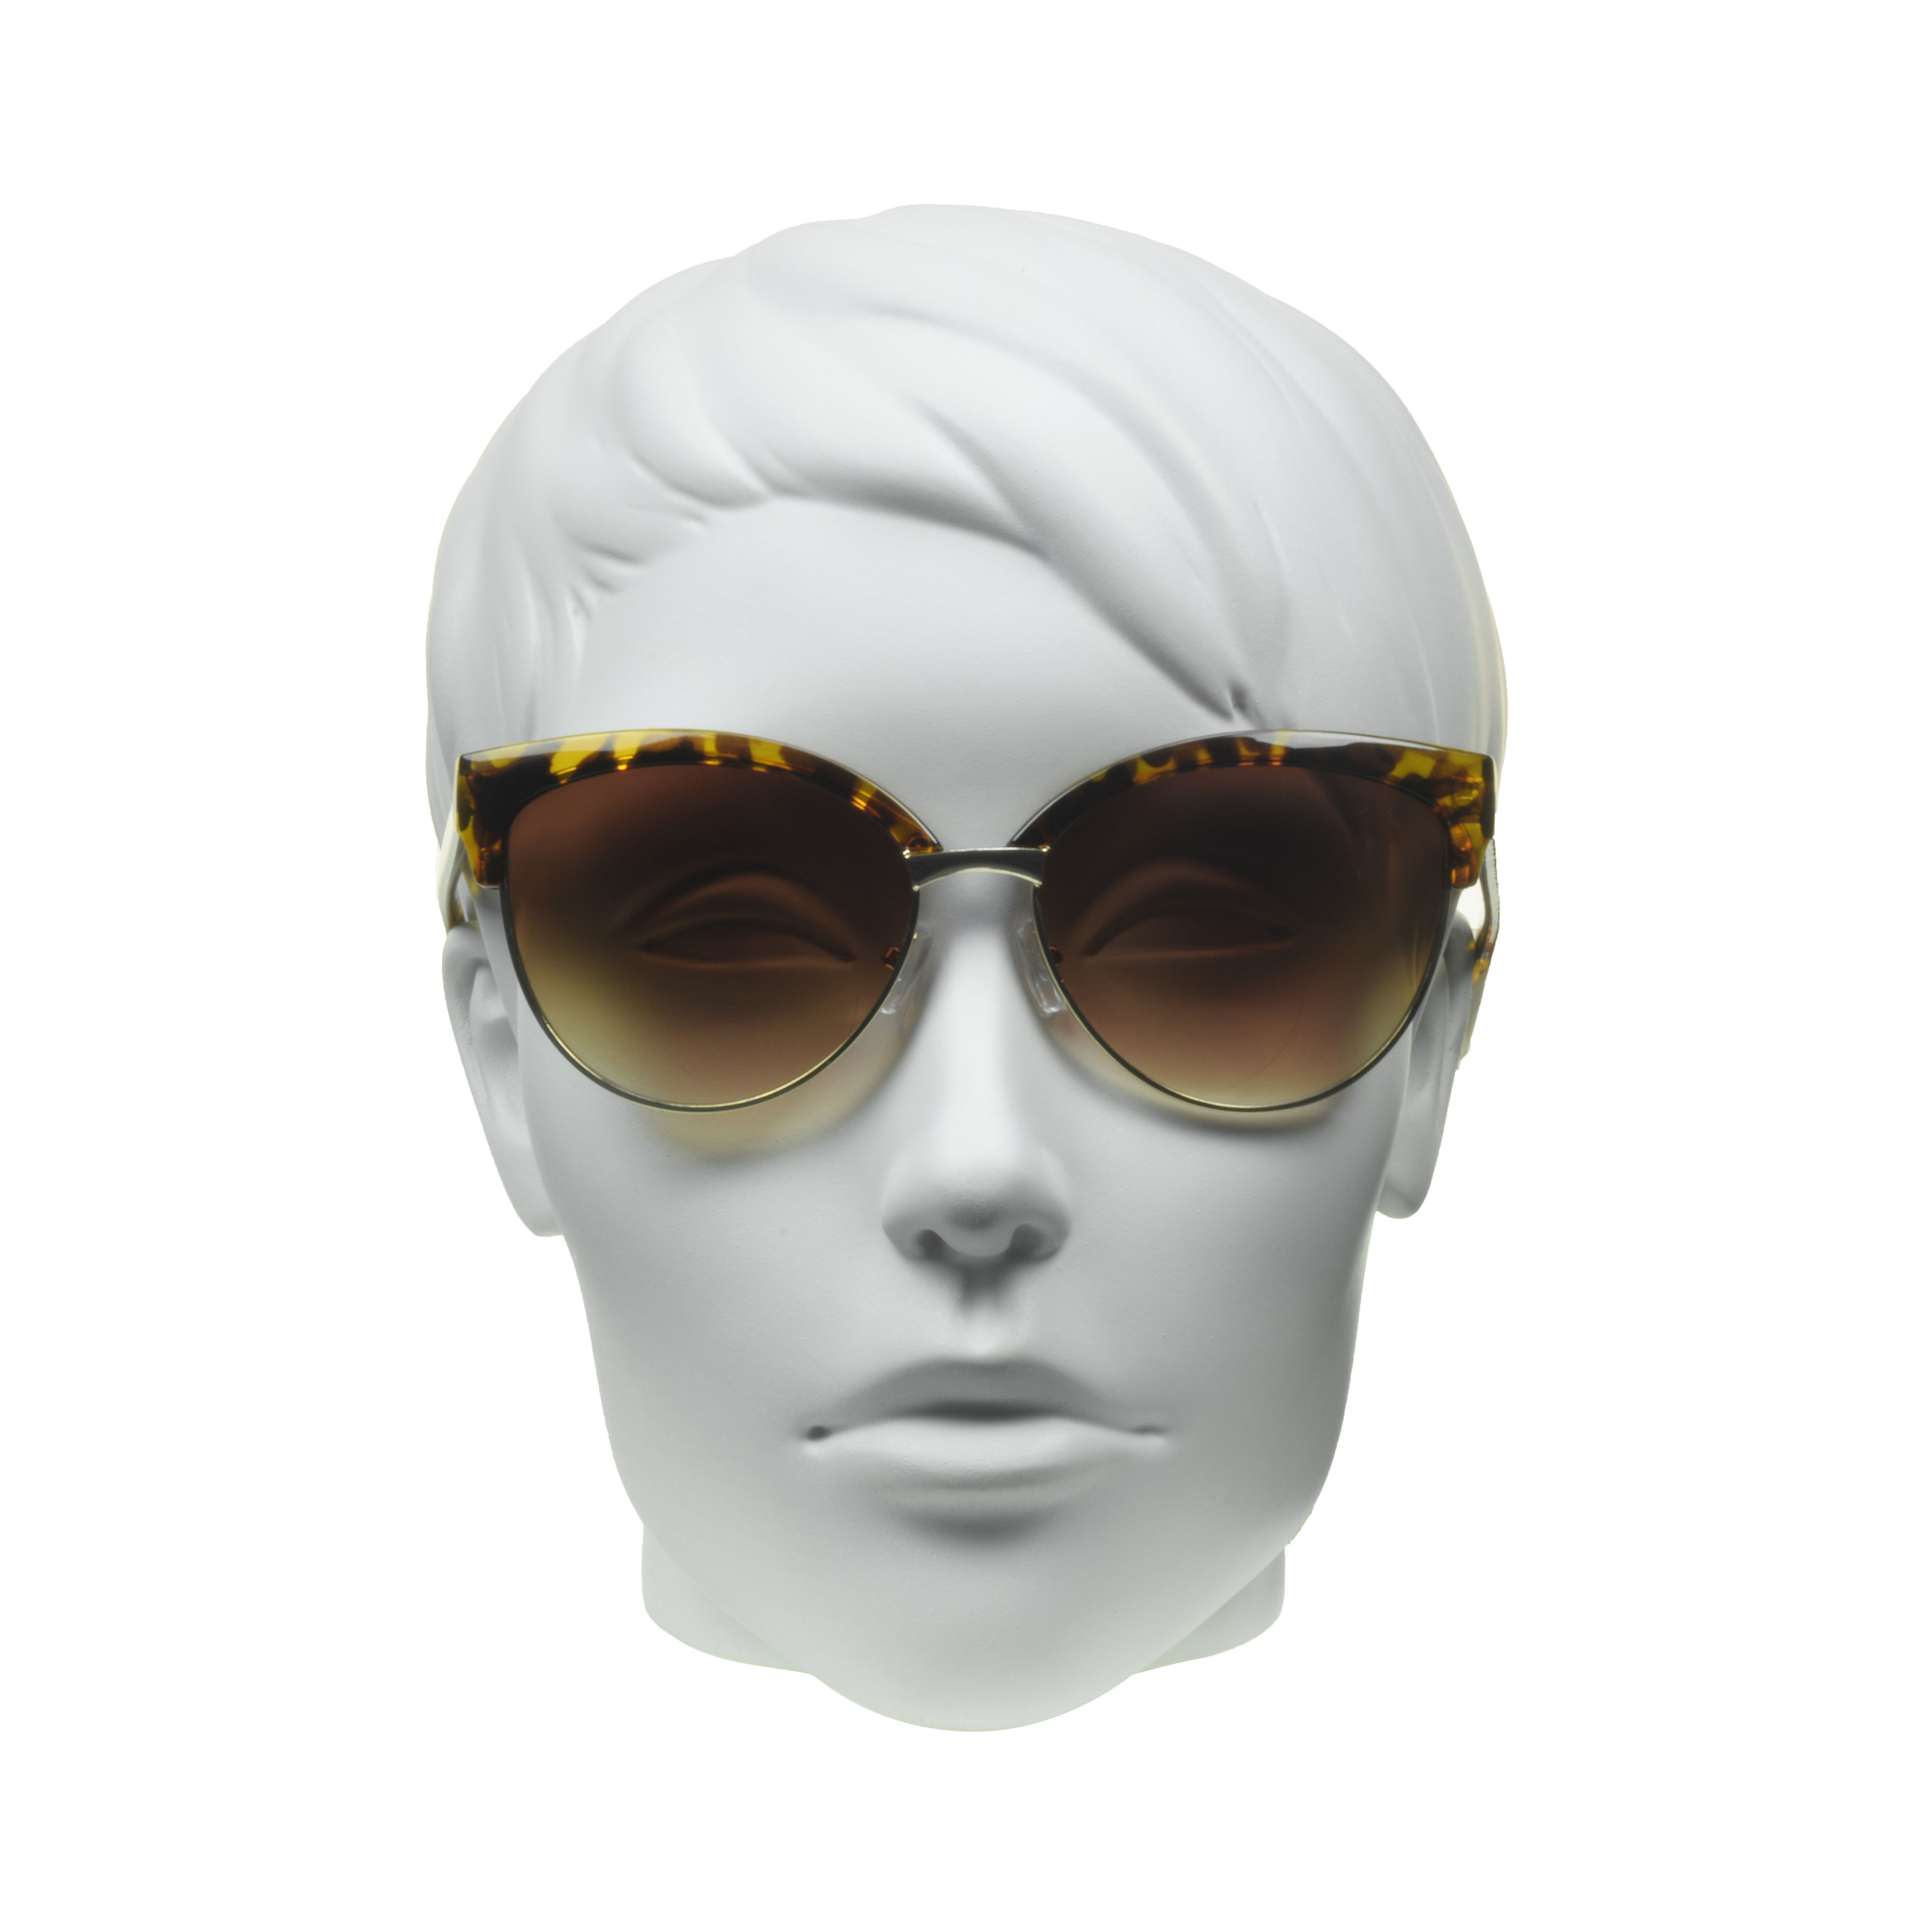 proSPORT Women Bifocal Reading Cateye Fashion Horn Rim Sunglasses Tortoise Gold Frame Brown Lens +2.75 - image 3 of 5